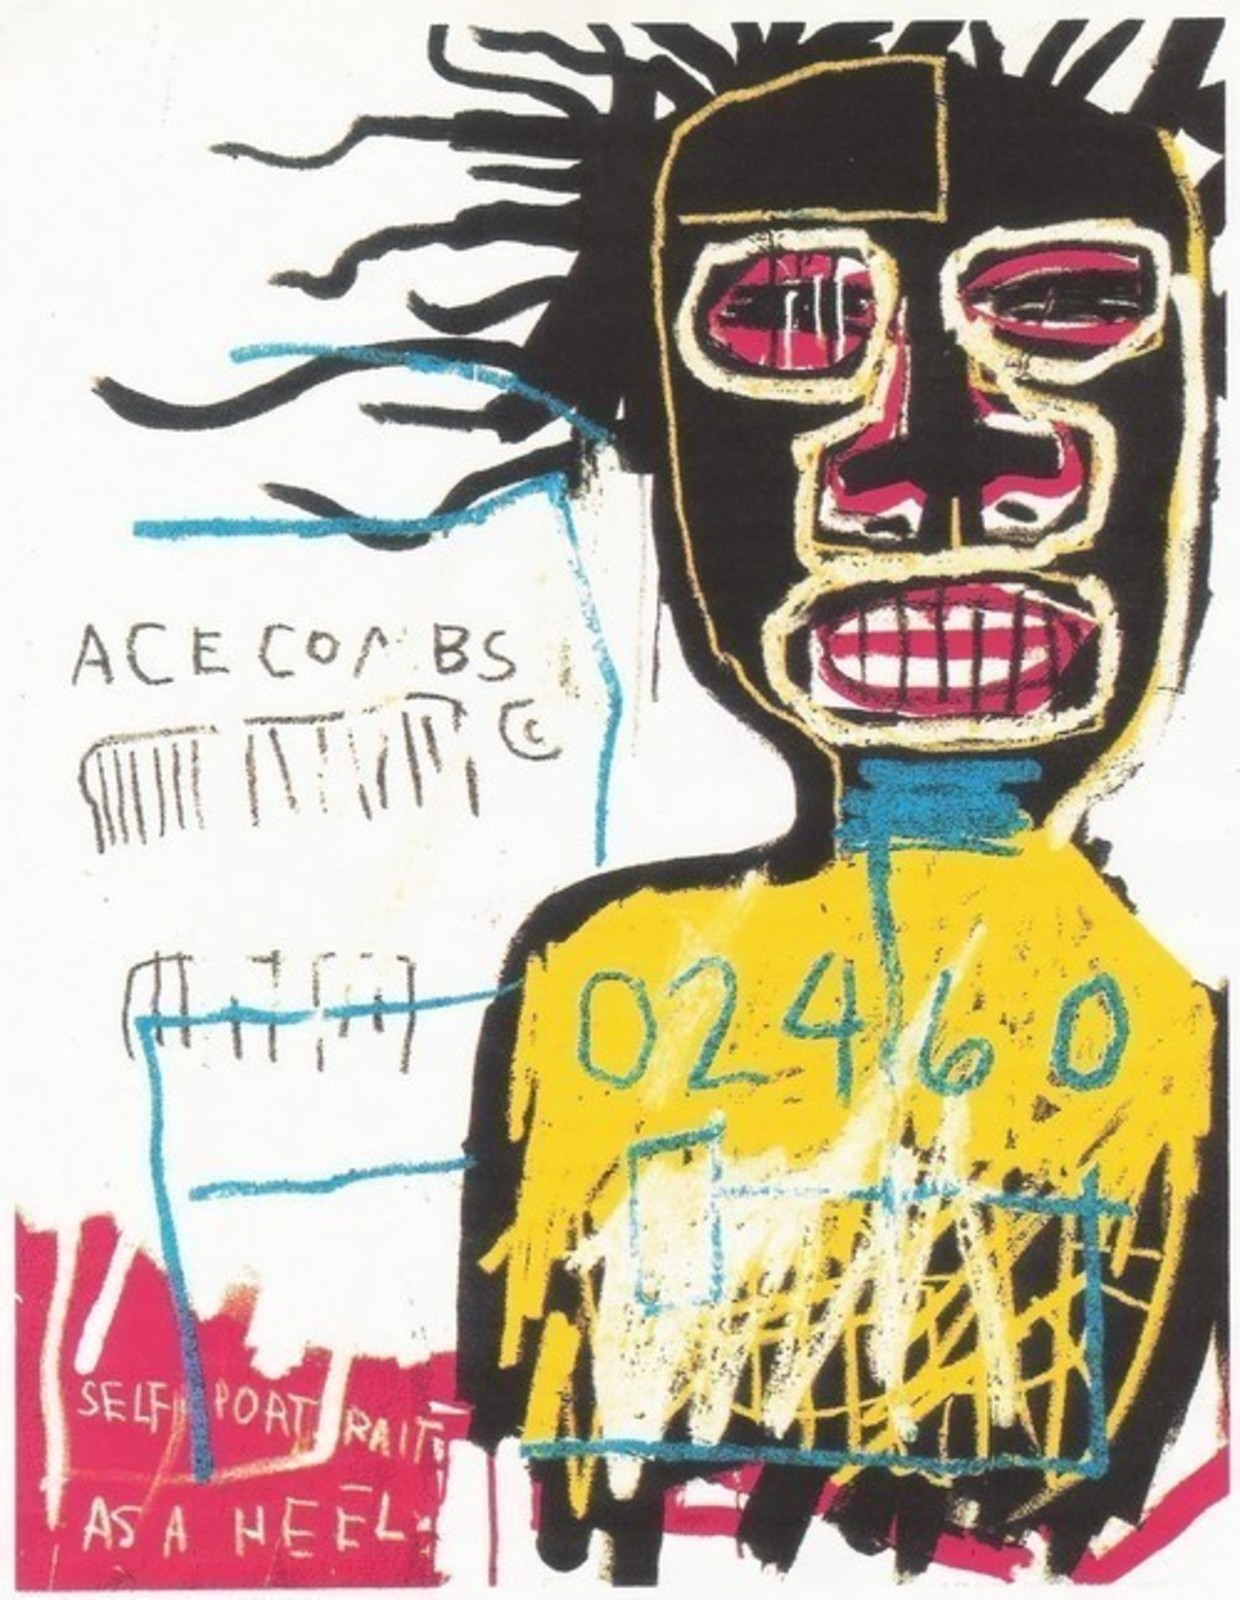 Jean-Michel Basquiat. Self-Portrait. Pursued. 1982. Acrylic and oil pencil on canvas. 127 x 102 cm.